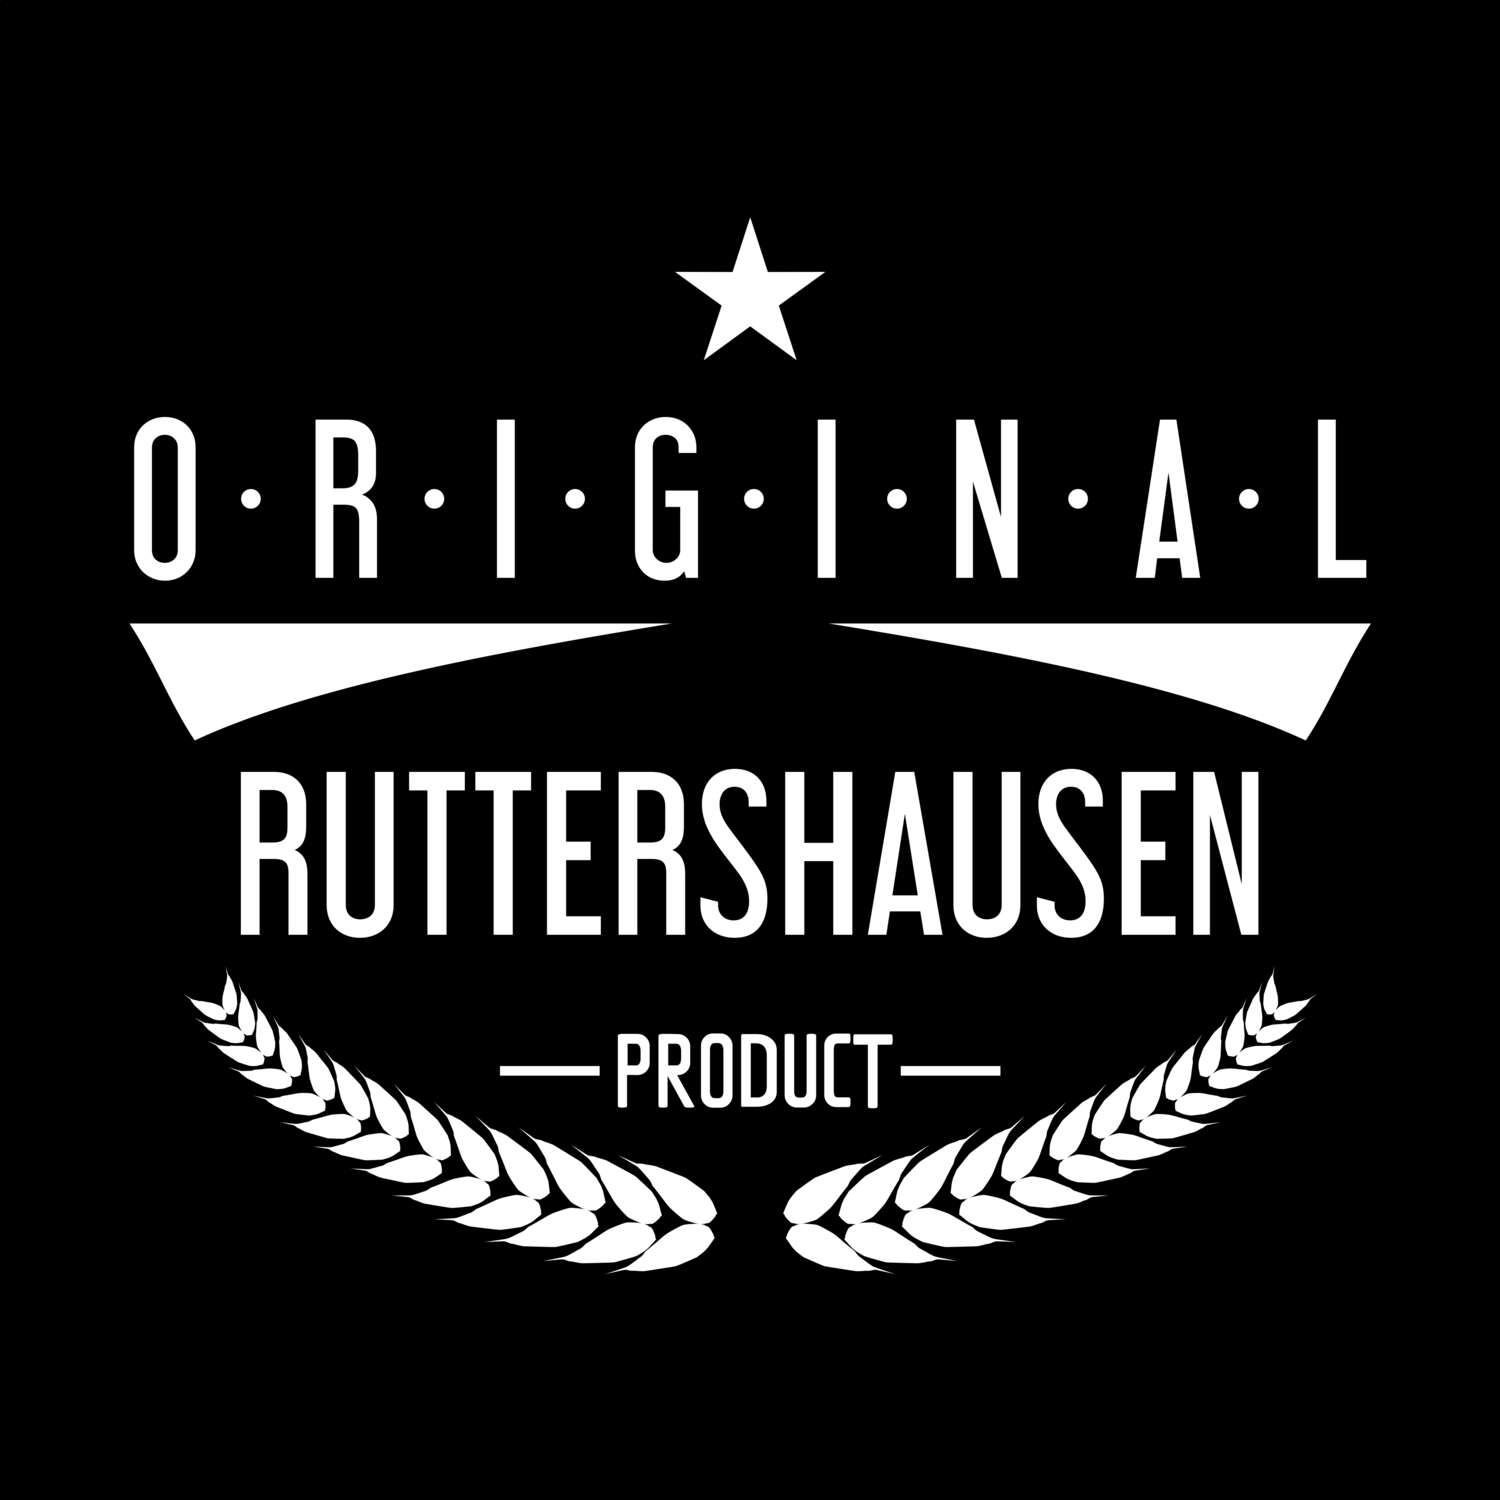 Ruttershausen T-Shirt »Original Product«